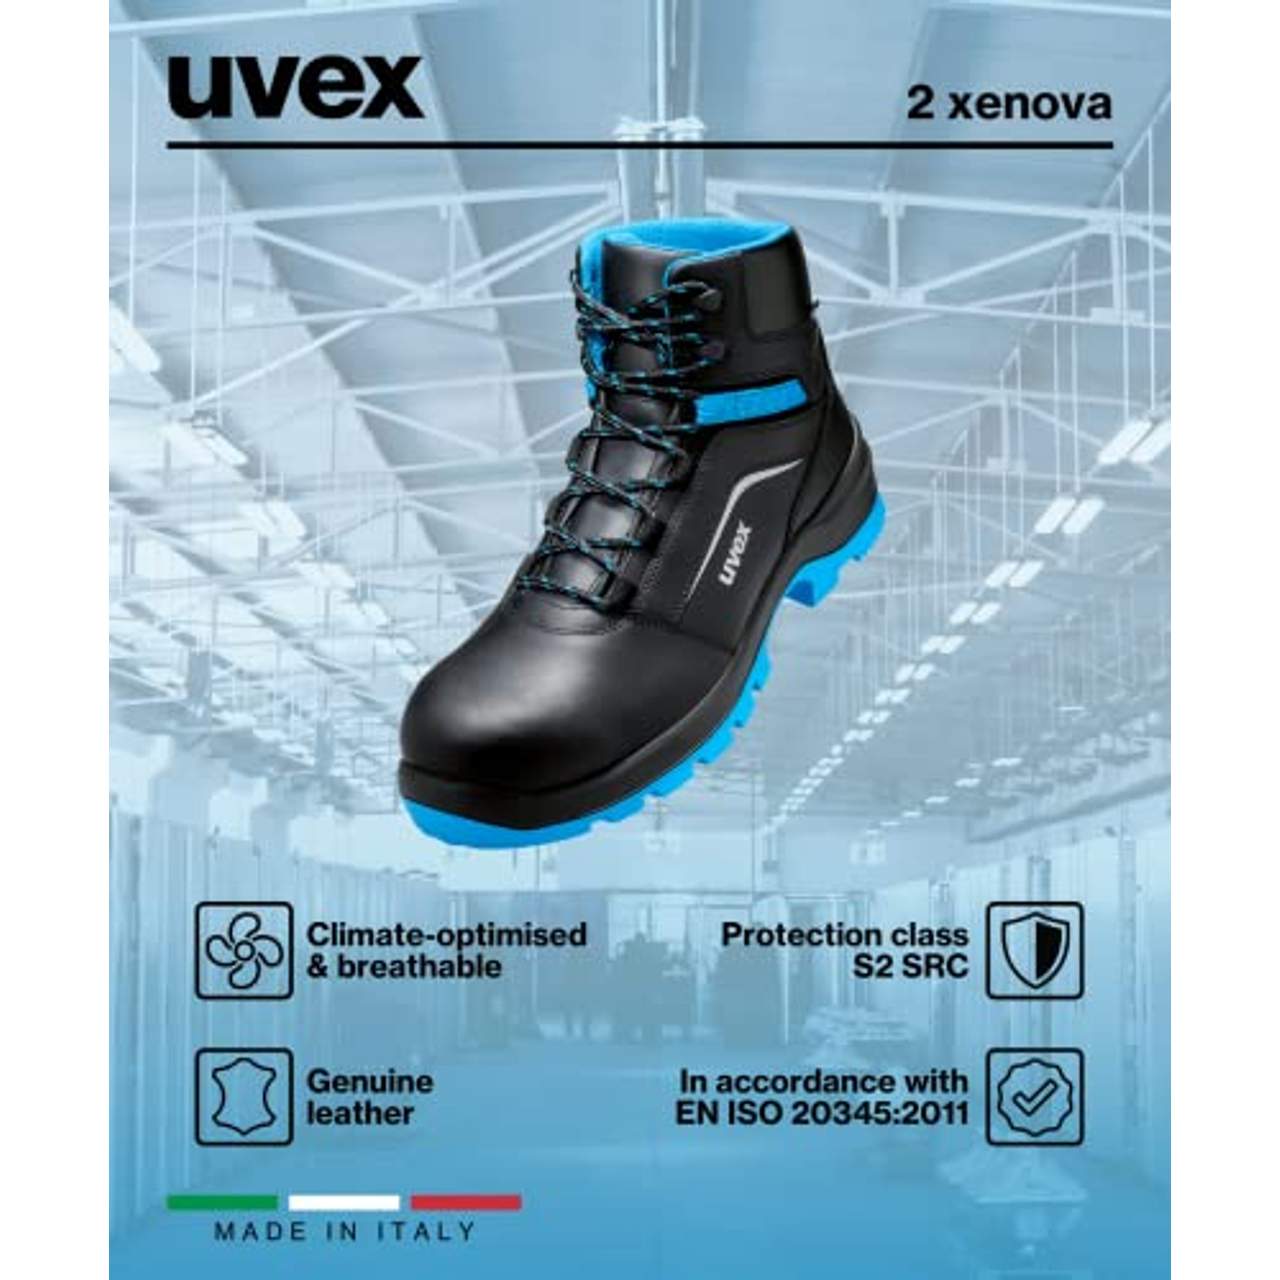 Uvex 2 Xenova Arbeitsstiefel